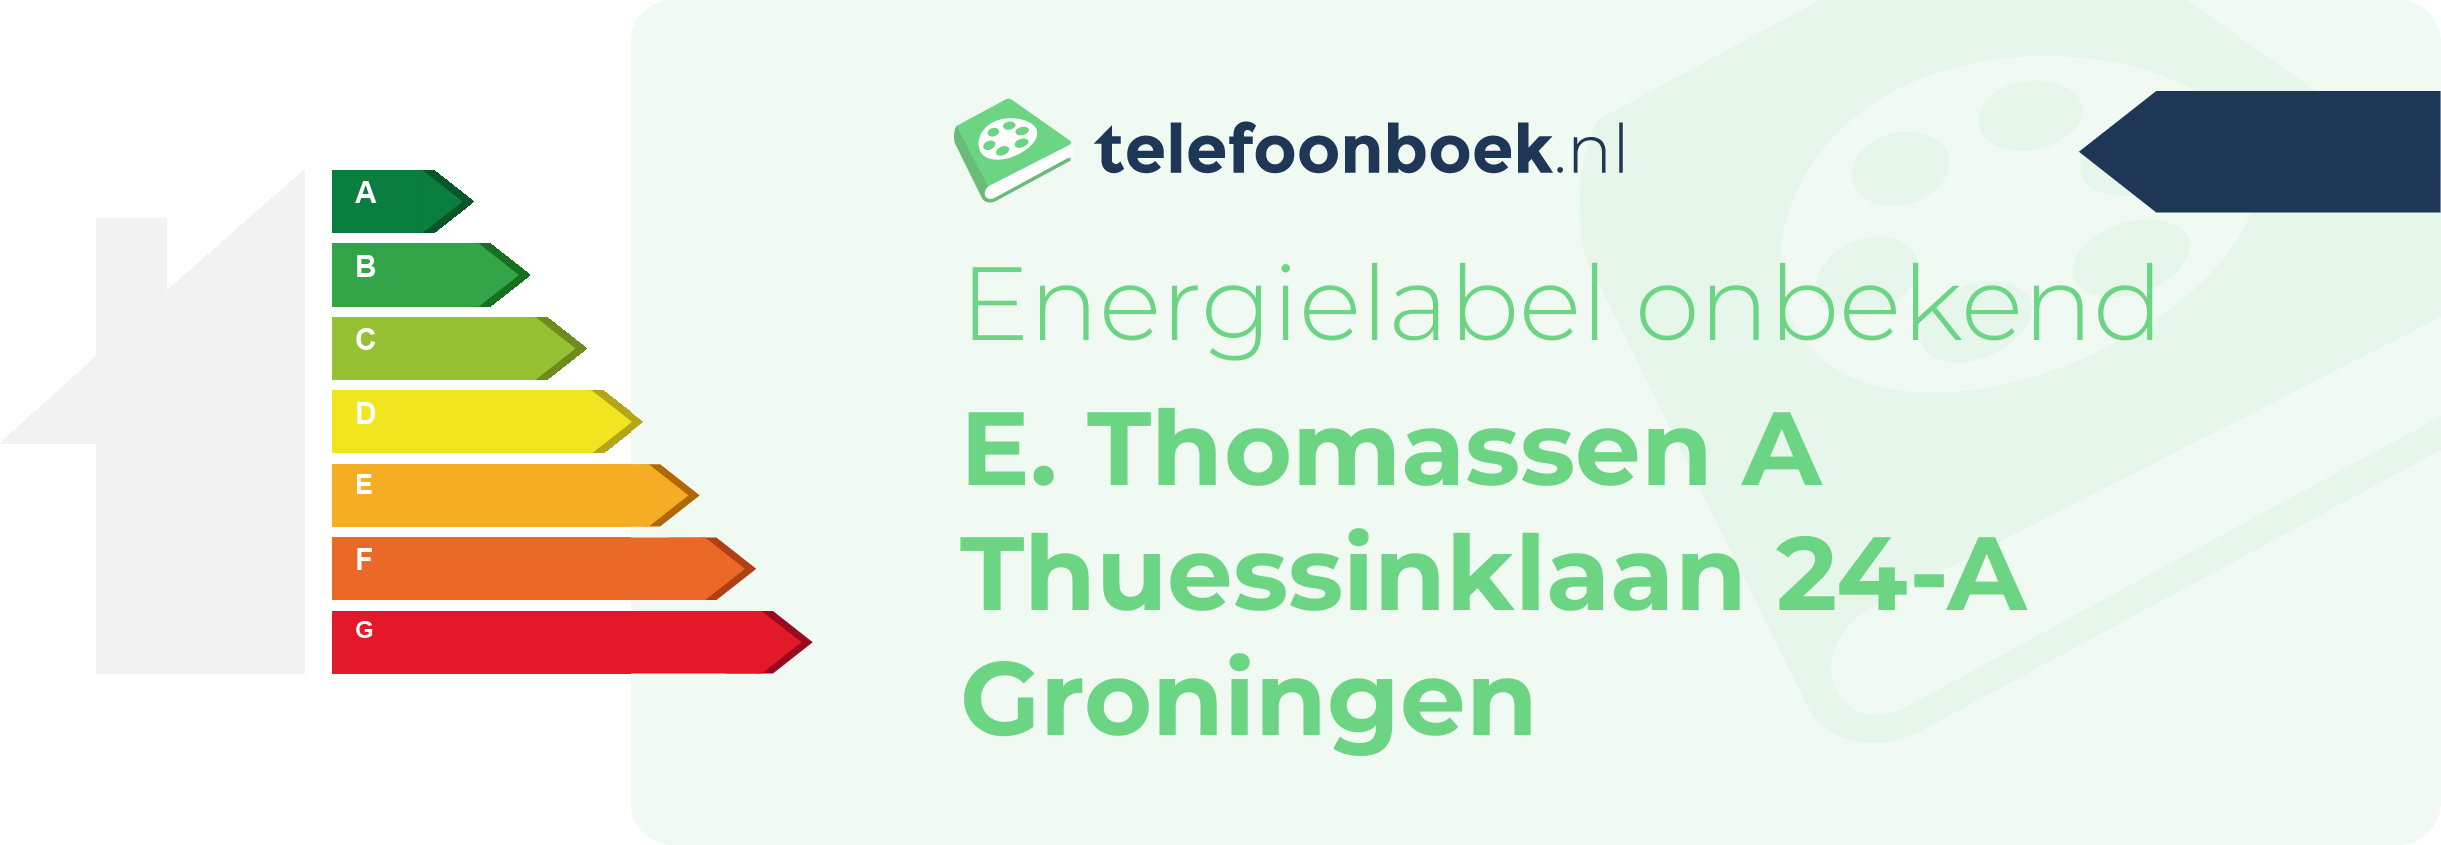 Energielabel E. Thomassen A Thuessinklaan 24-A Groningen